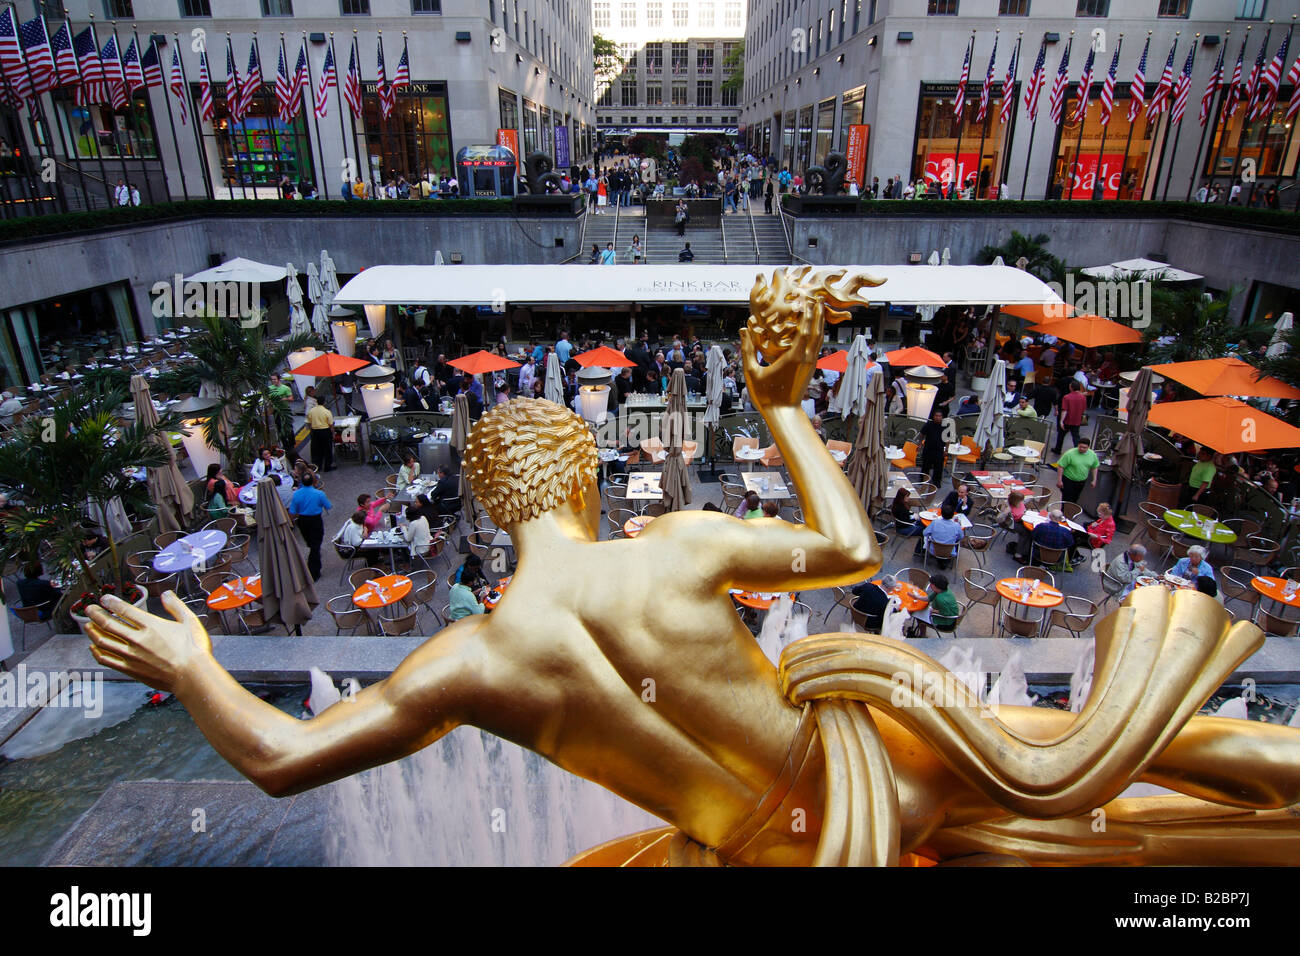 The Prometheus golden statue in Rockefeller Center - New York City, USA Stock Photo